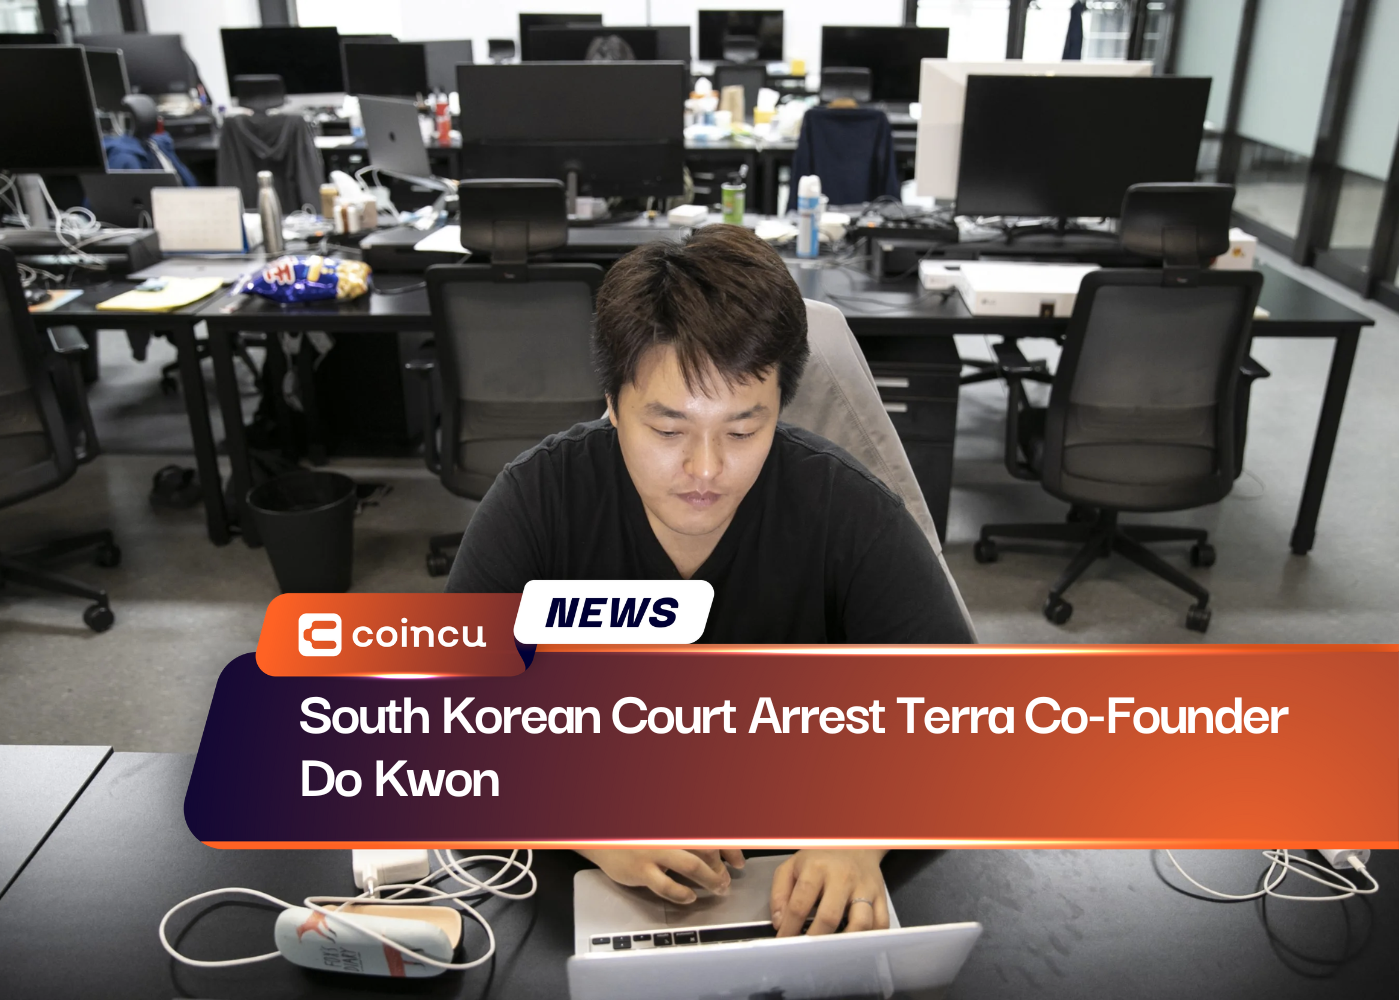 South Korean Court Arrest Terra Co-Founder Do Kwon